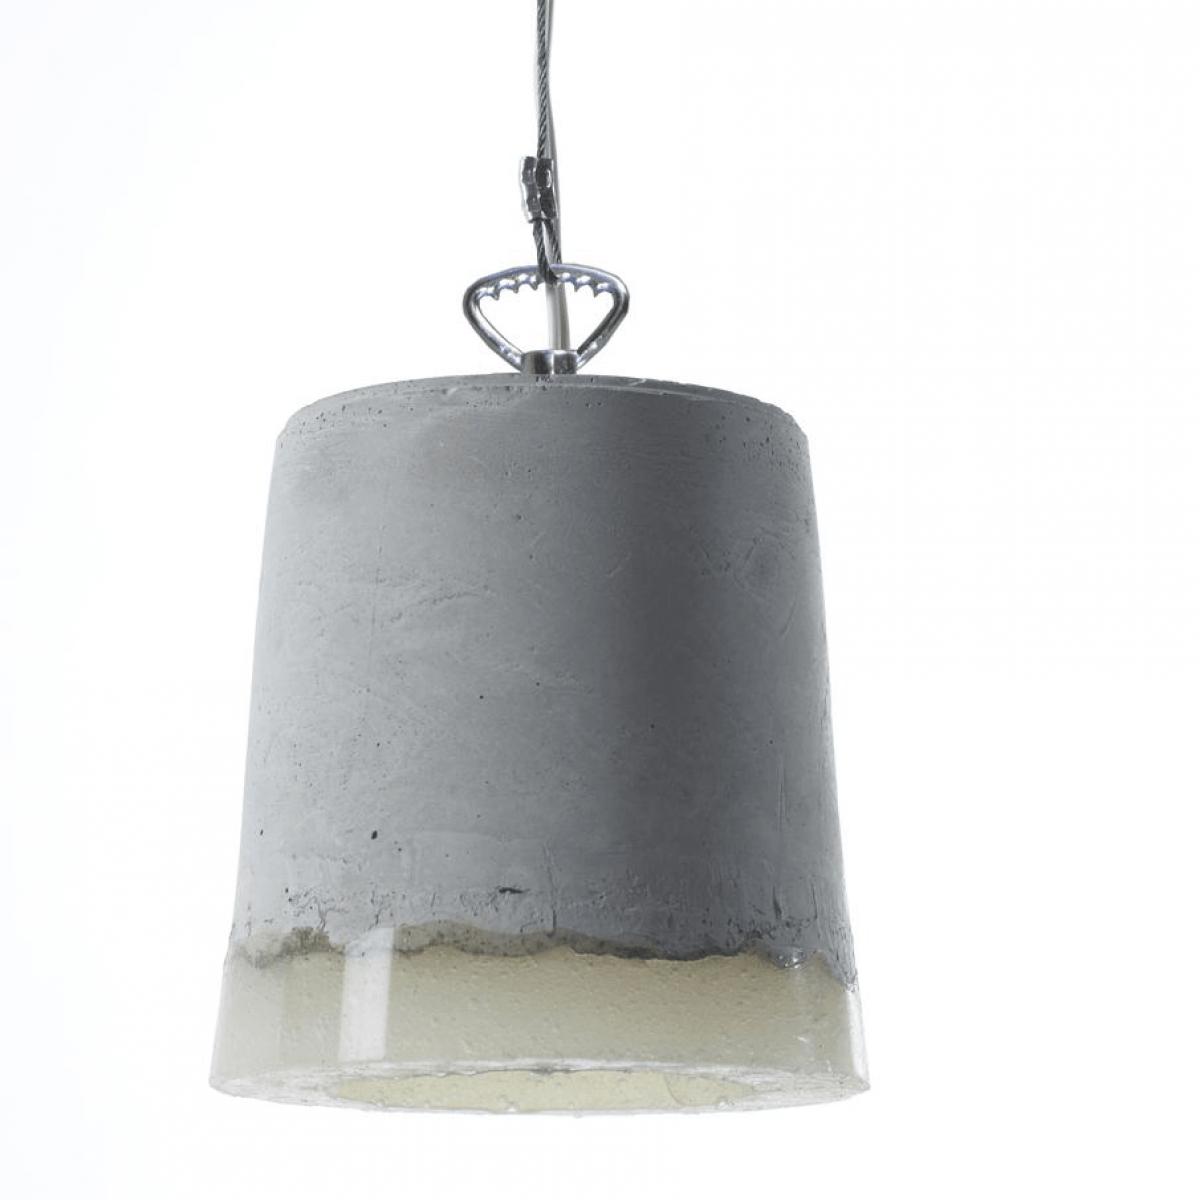 CONCRETE hanglamp Small